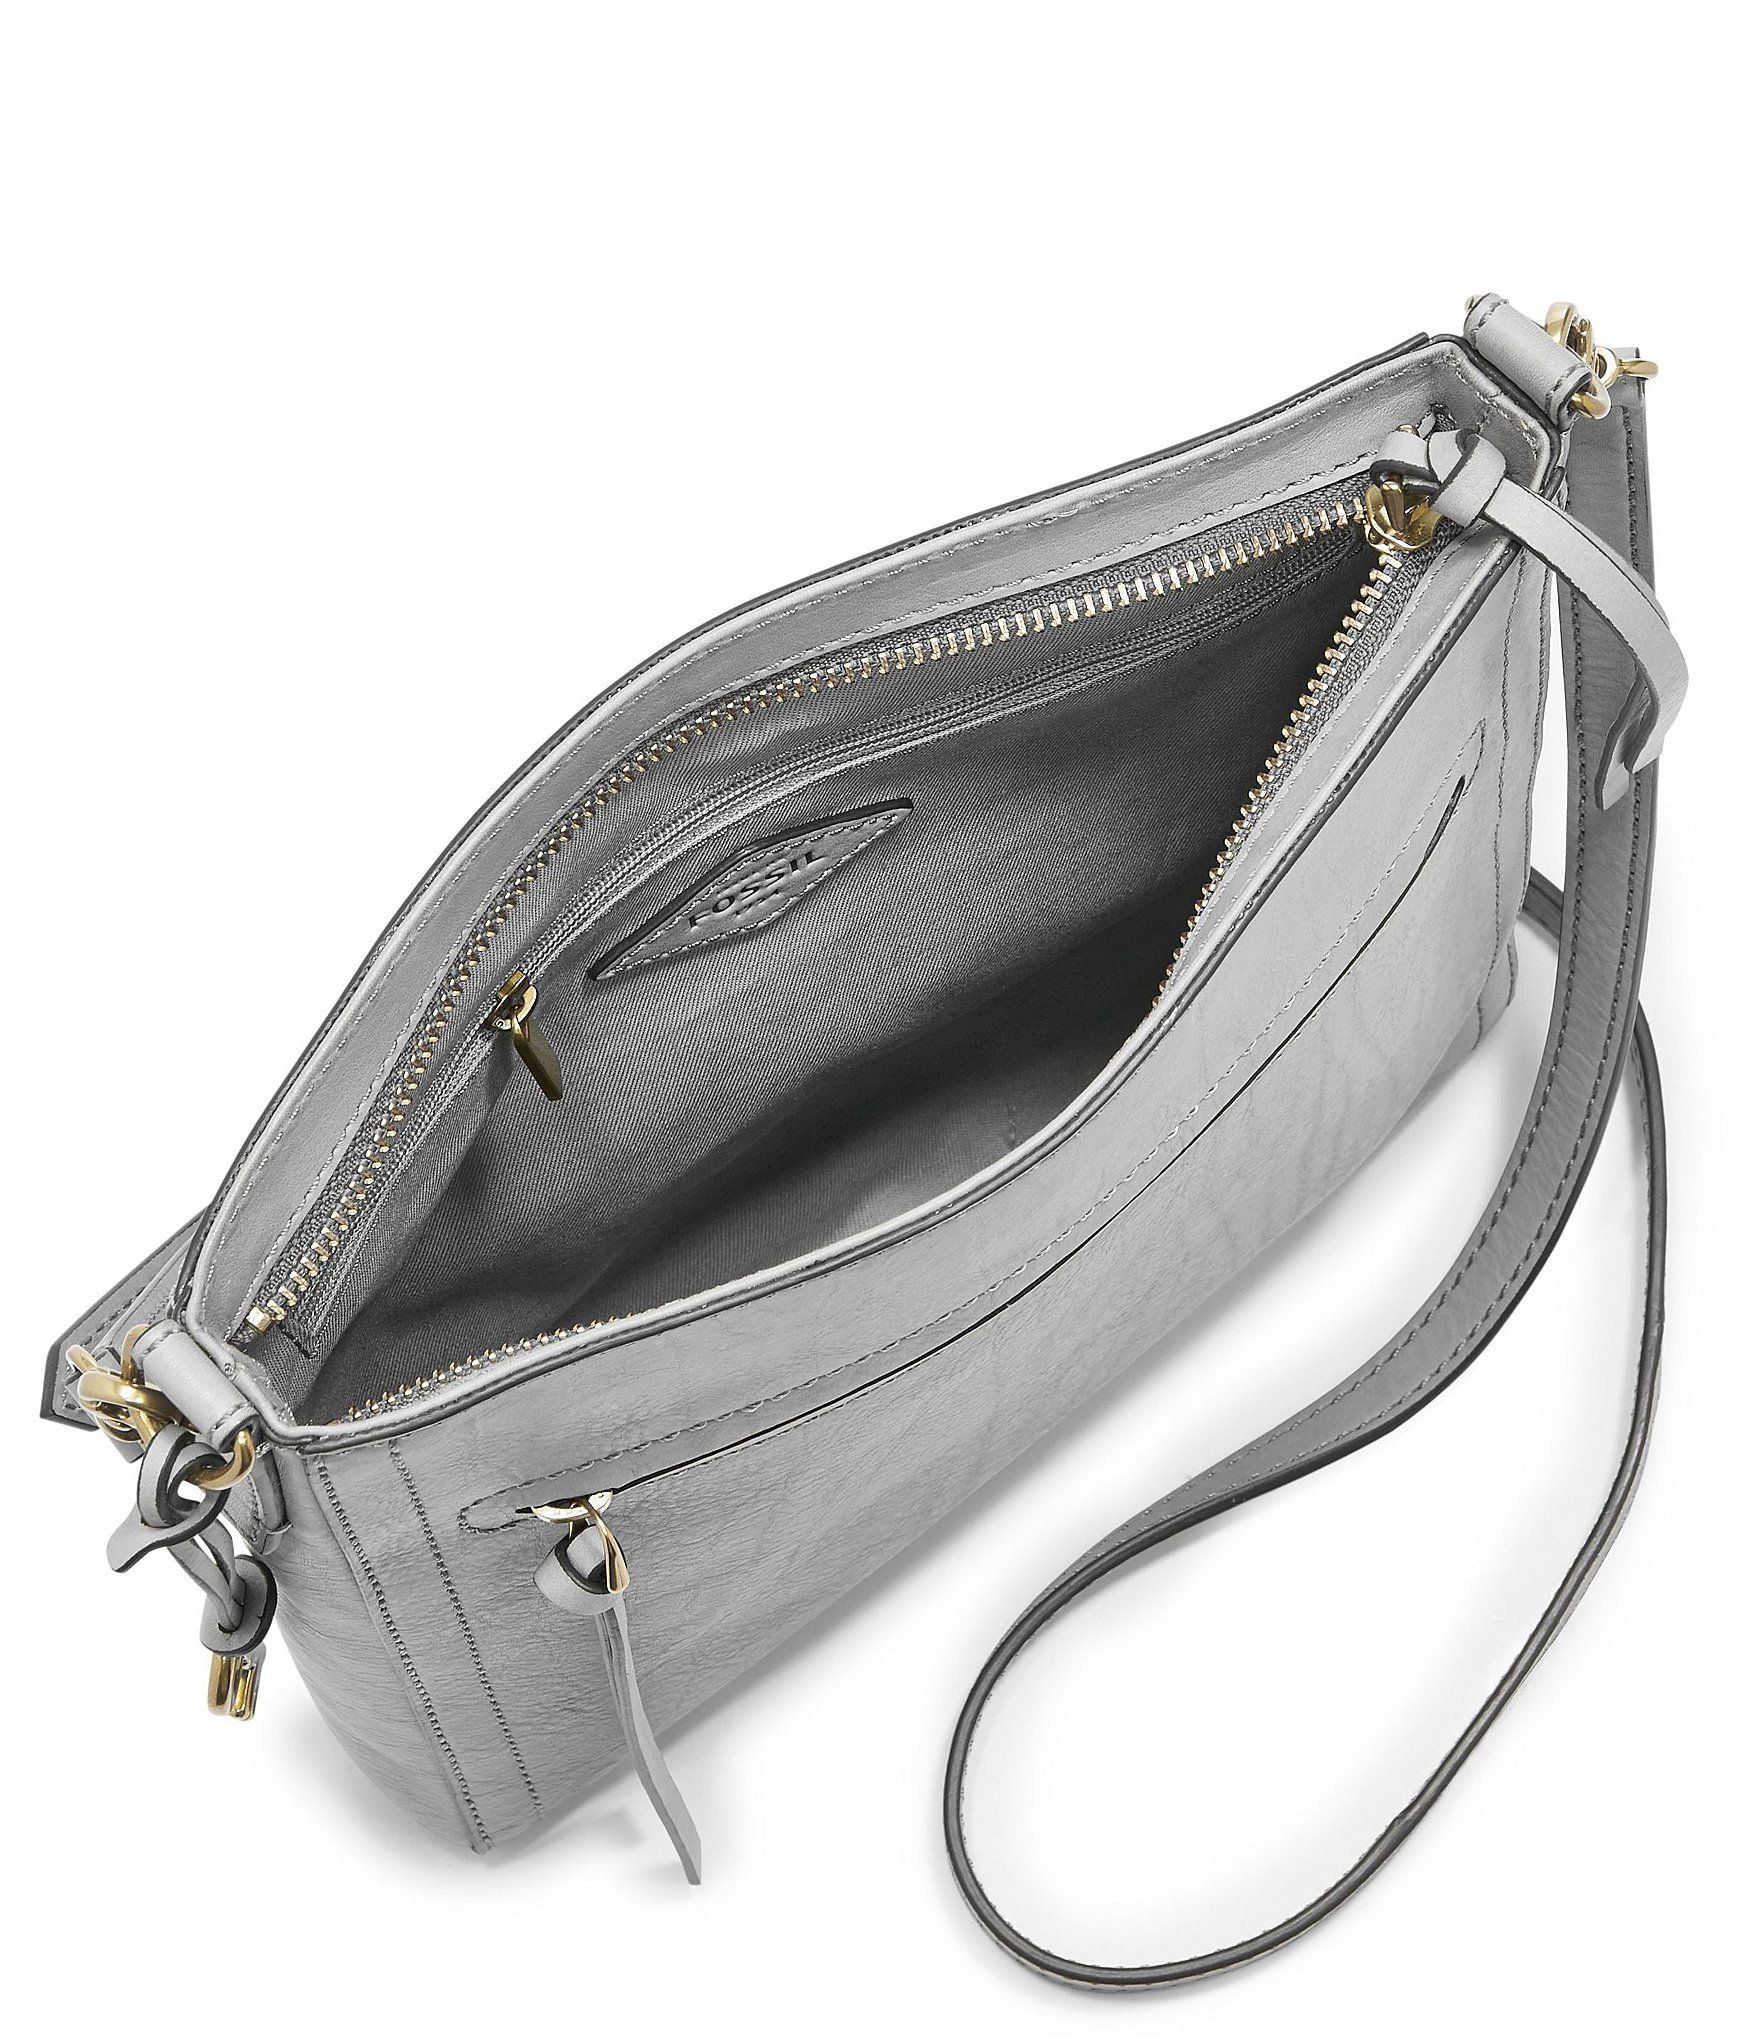 Lyst - Fossil Emma Leather Crossbody Bag in Gray